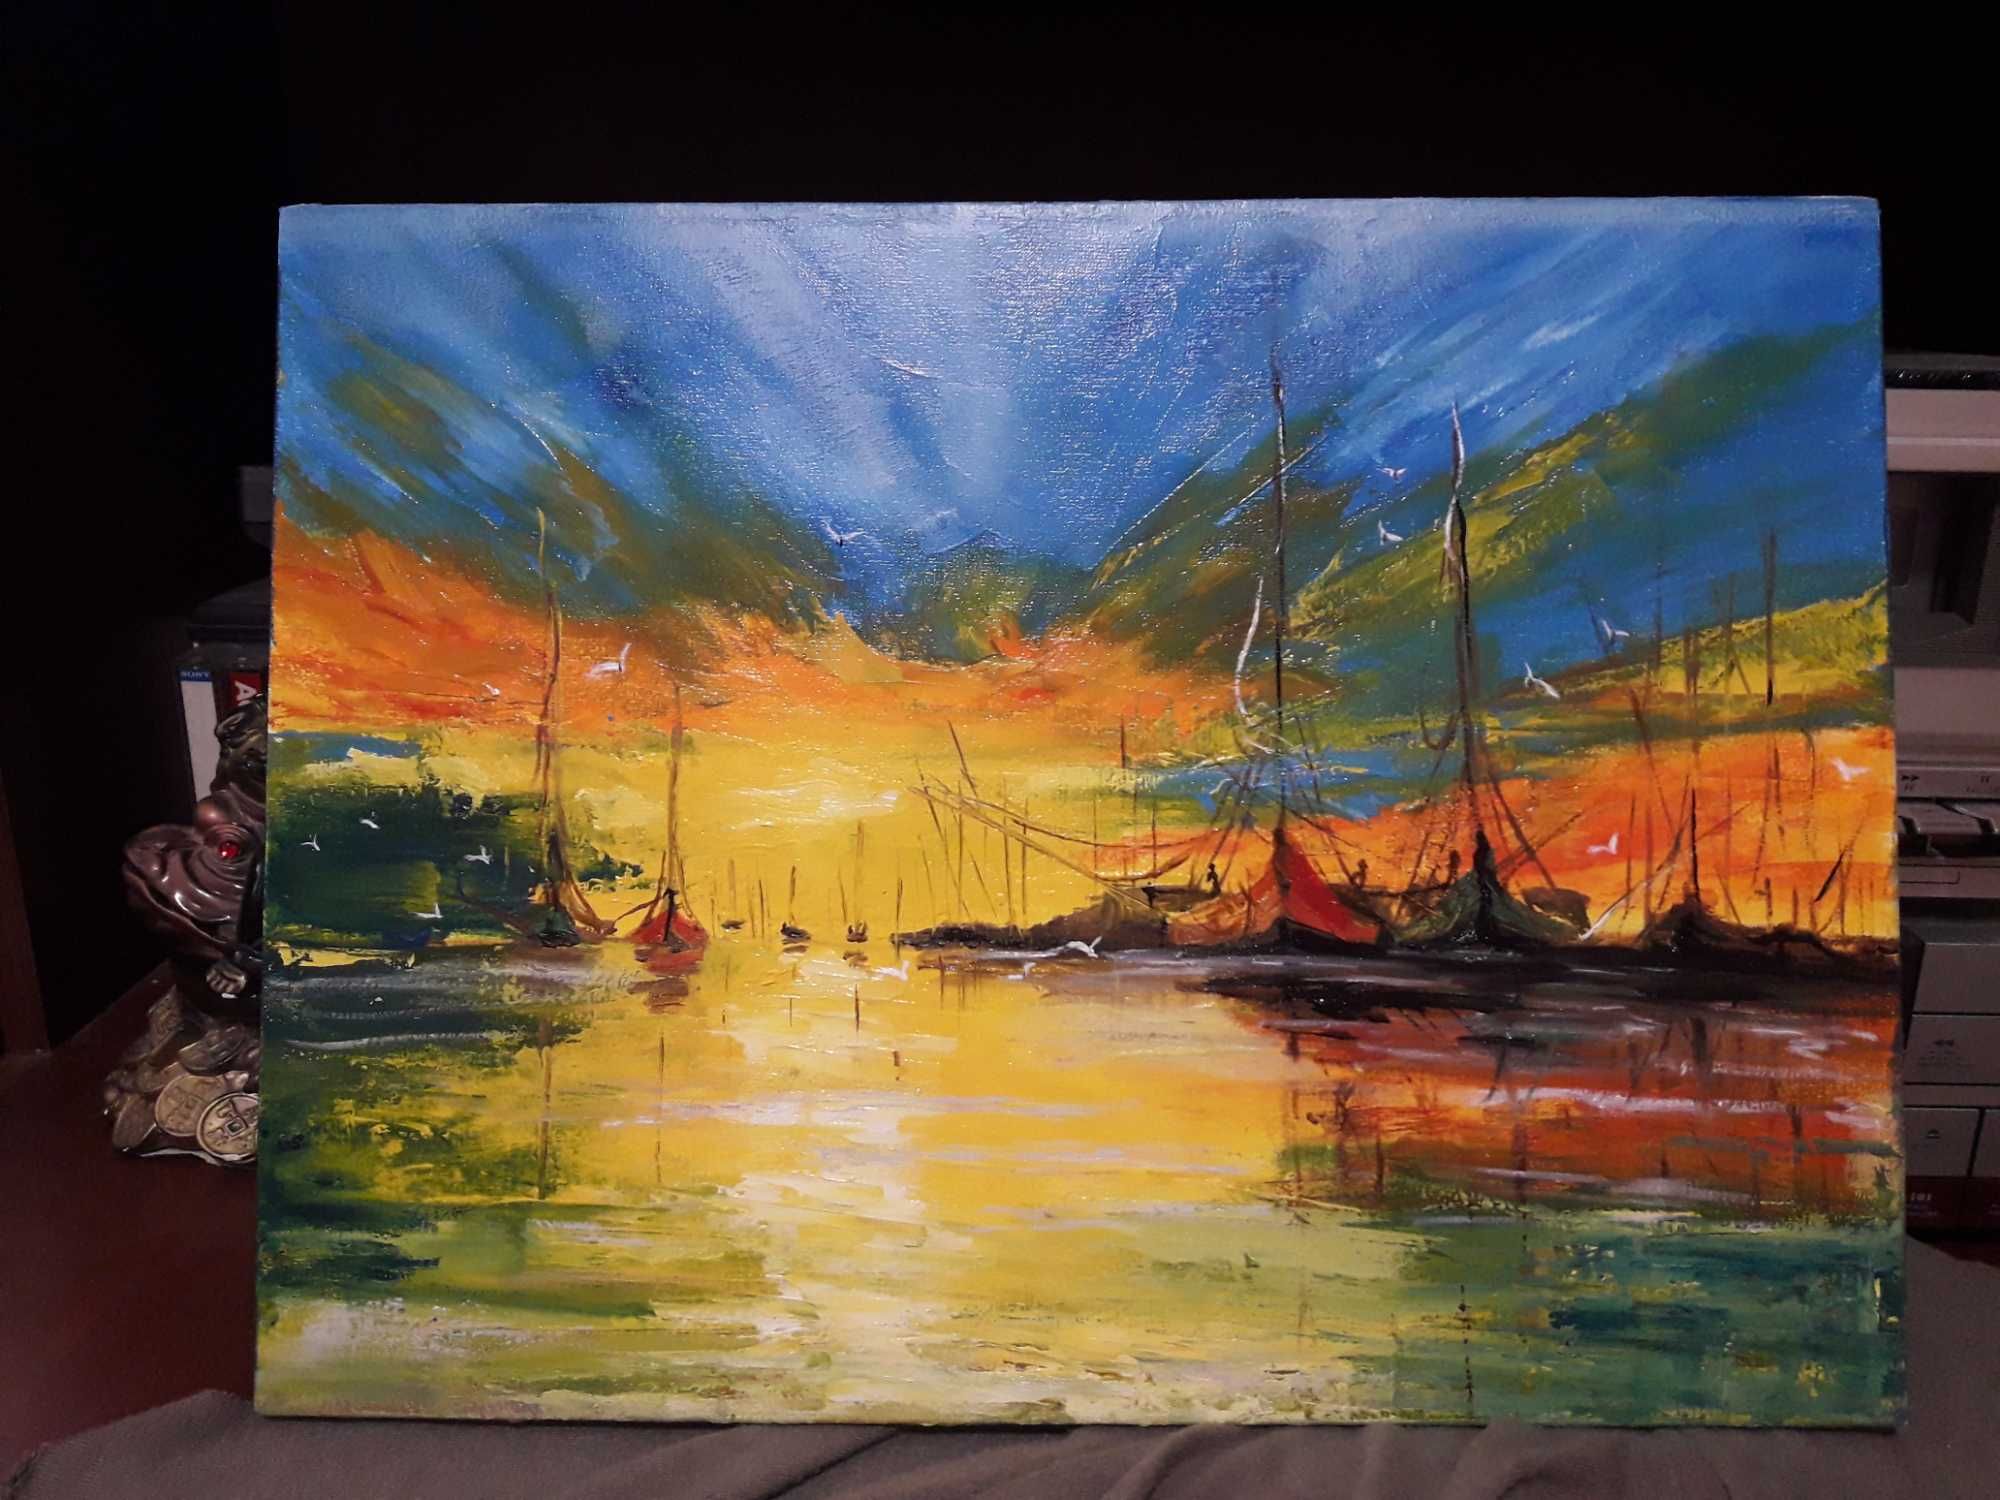 Рассвет на море, яхты, картина маслом на холсте 30х40